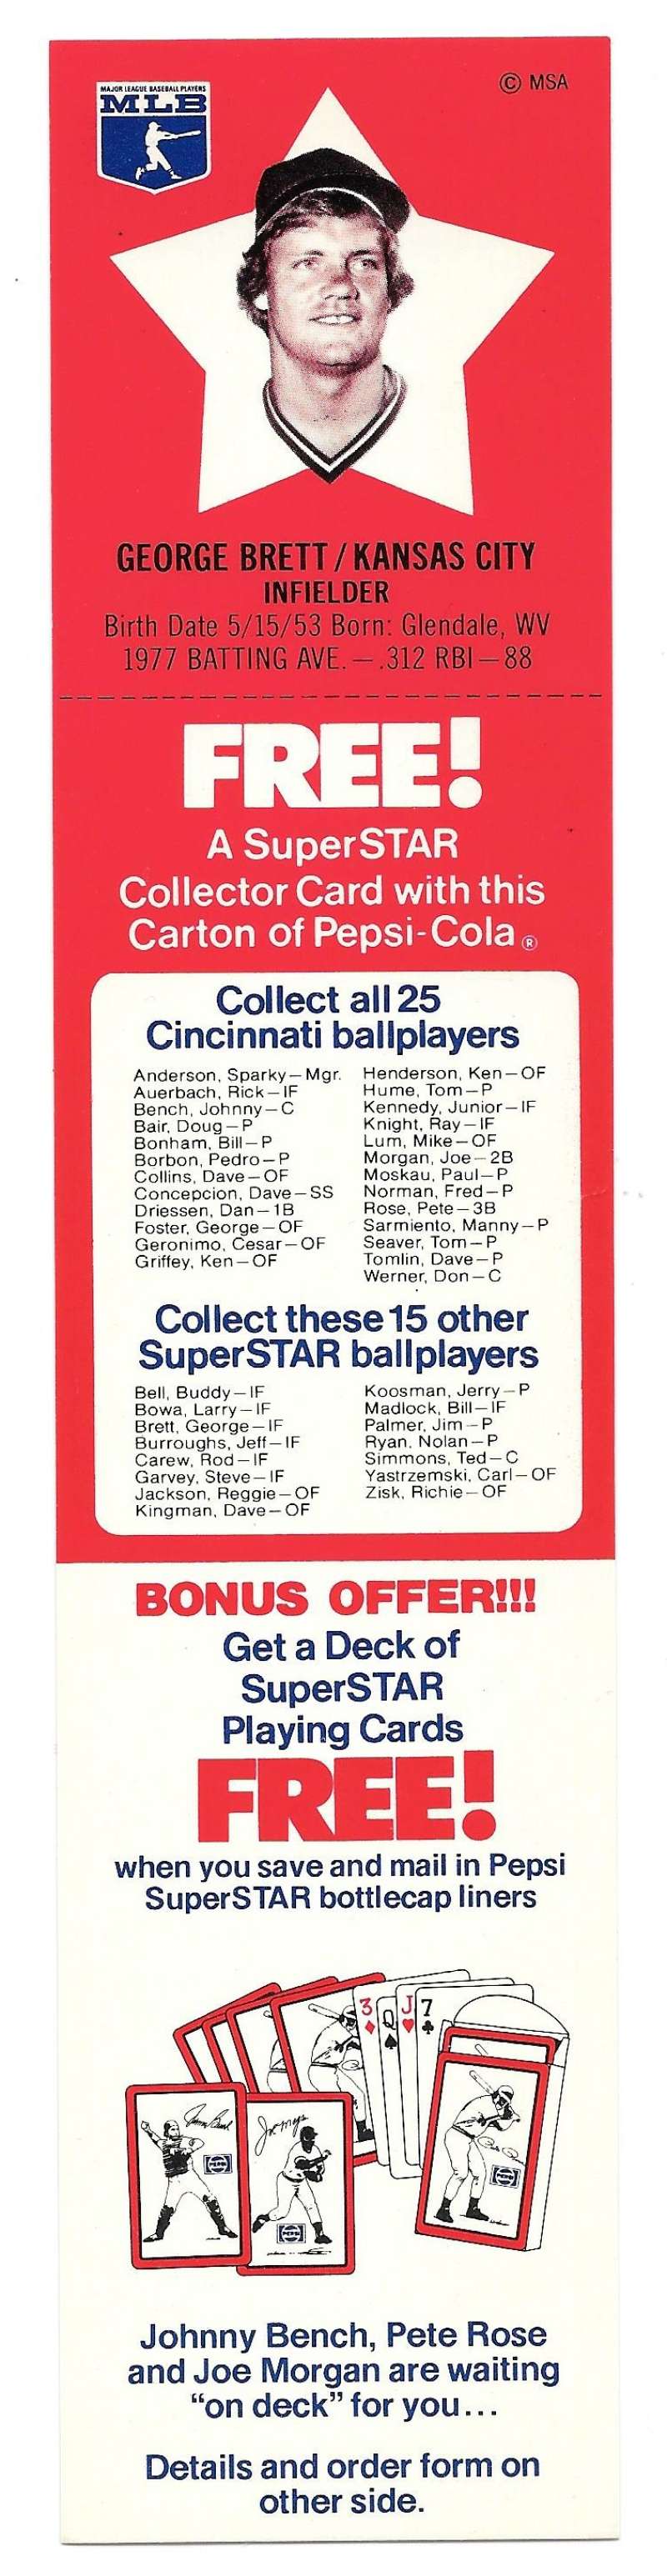 1978 Pepsi-Cola Superstar Tab - KANSAS CITY ROYALS George Brett